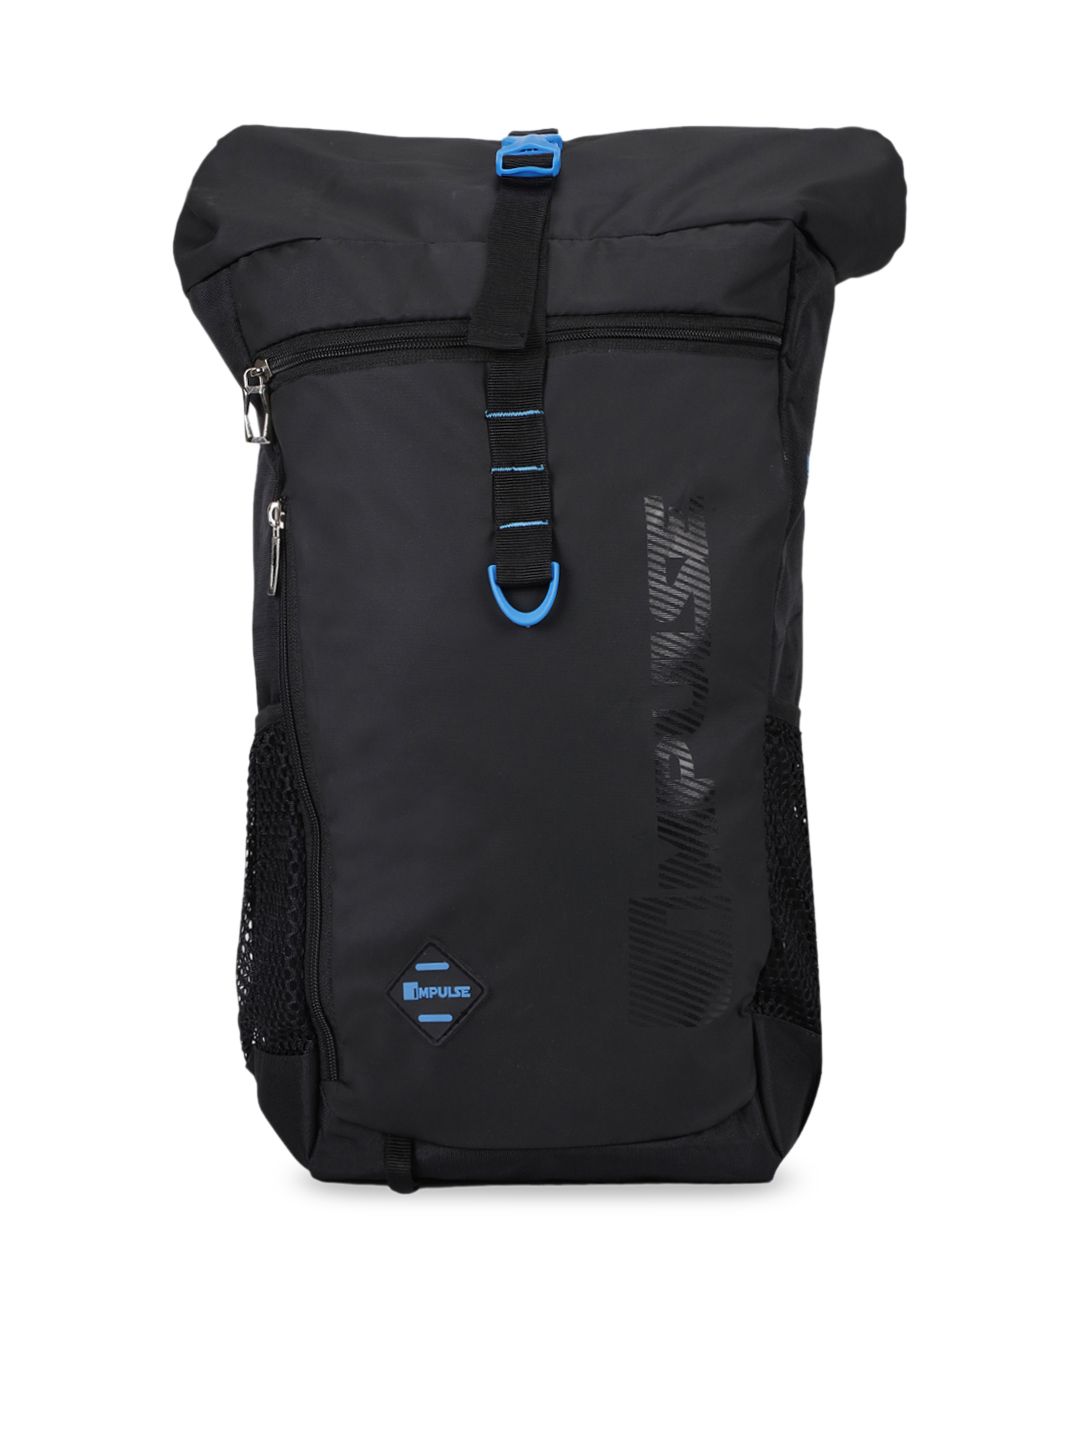 Impulse Unisex Black Solid Backpack Price in India